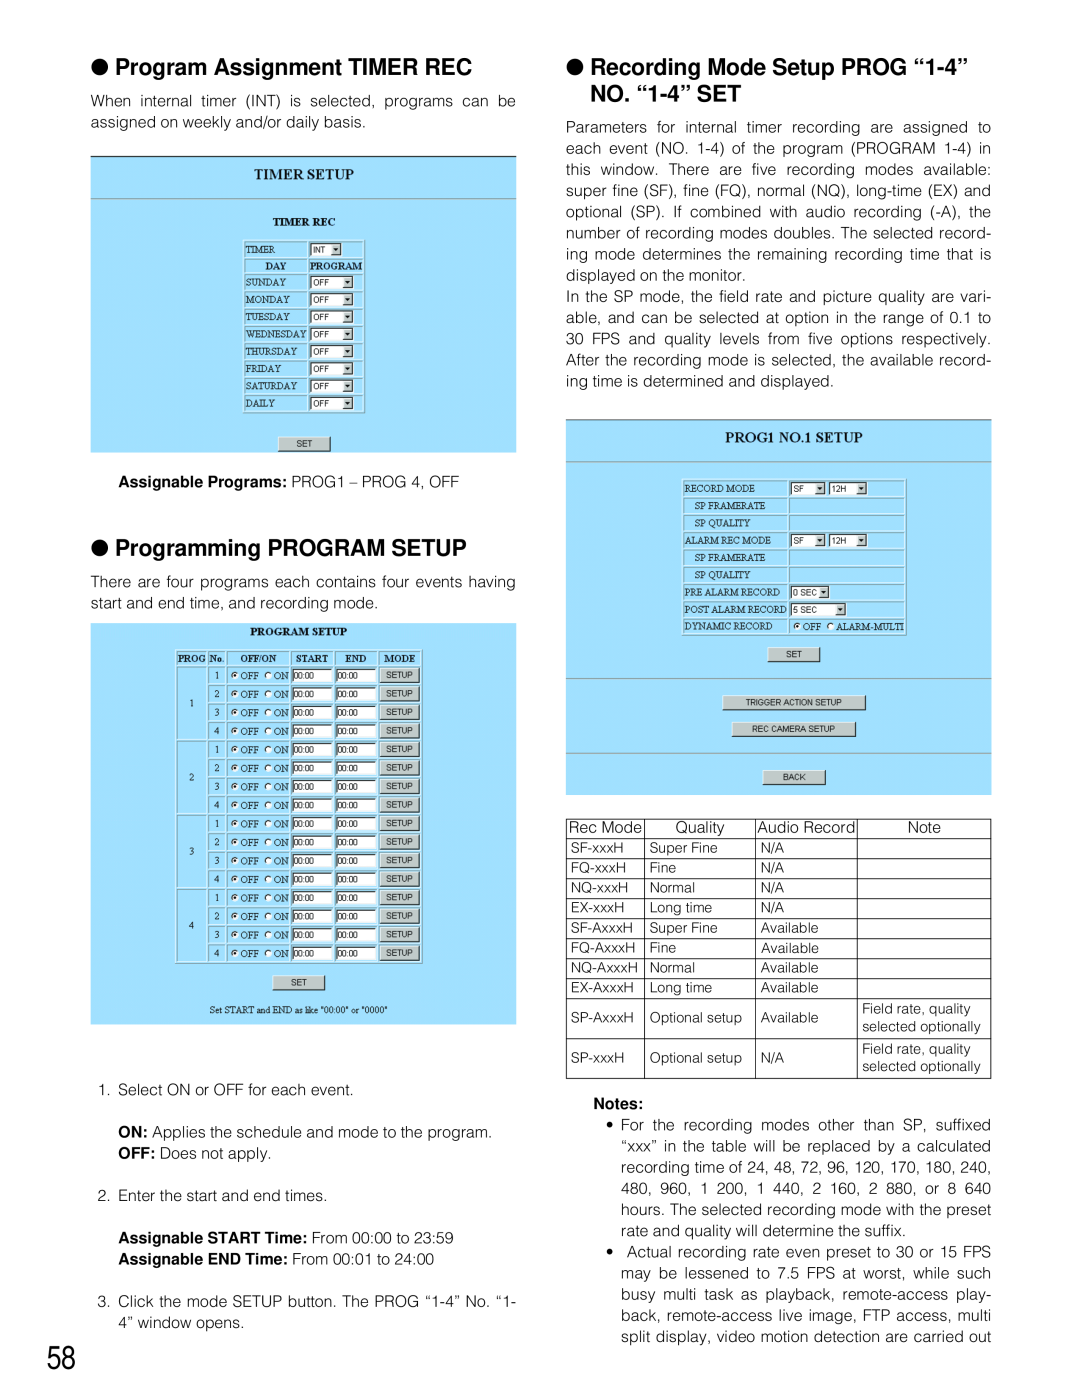 Panasonic WJ-HD200 Program Assignment TIMER REC, Programming PROGRAM SETUP, Recording Mode Setup PROG “1-4”NO. “1-4”SET 